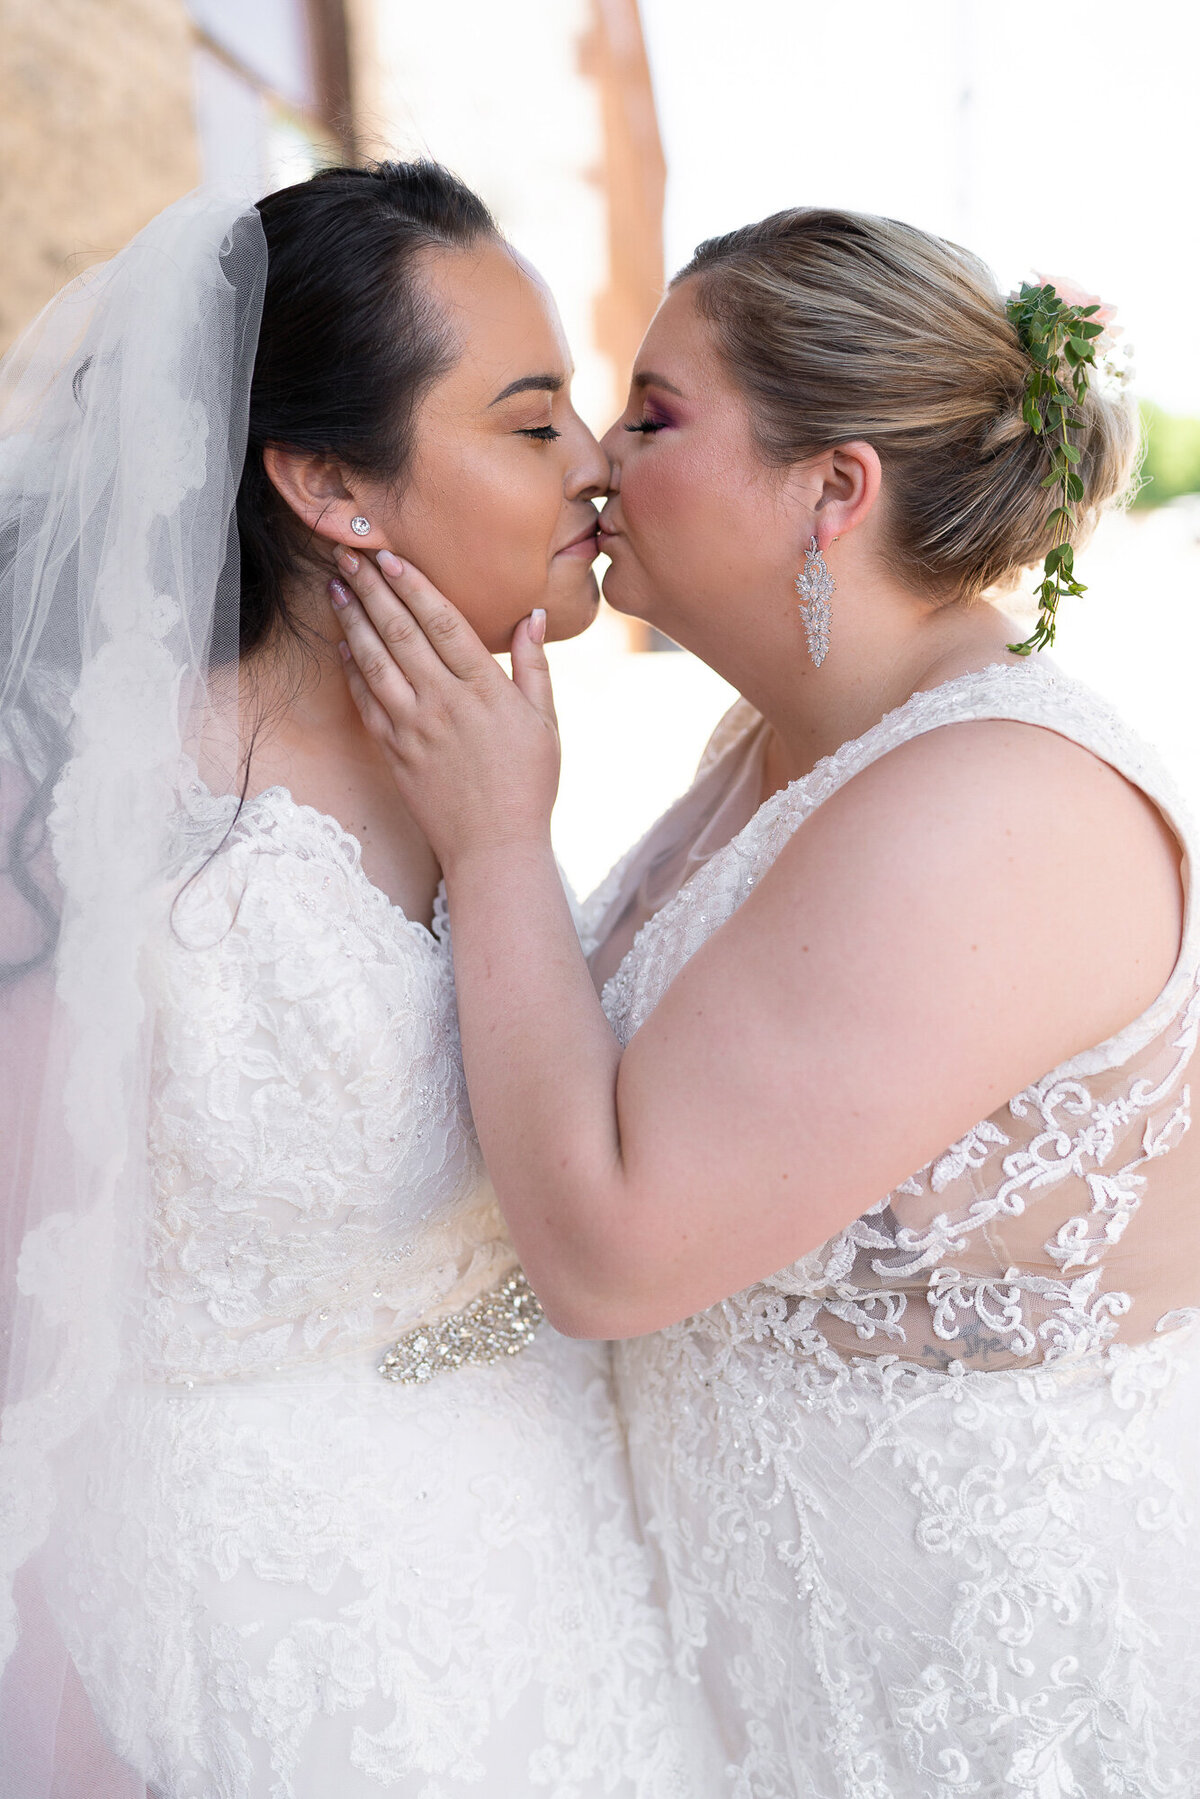 Lesbian couple kisses on wedding day.